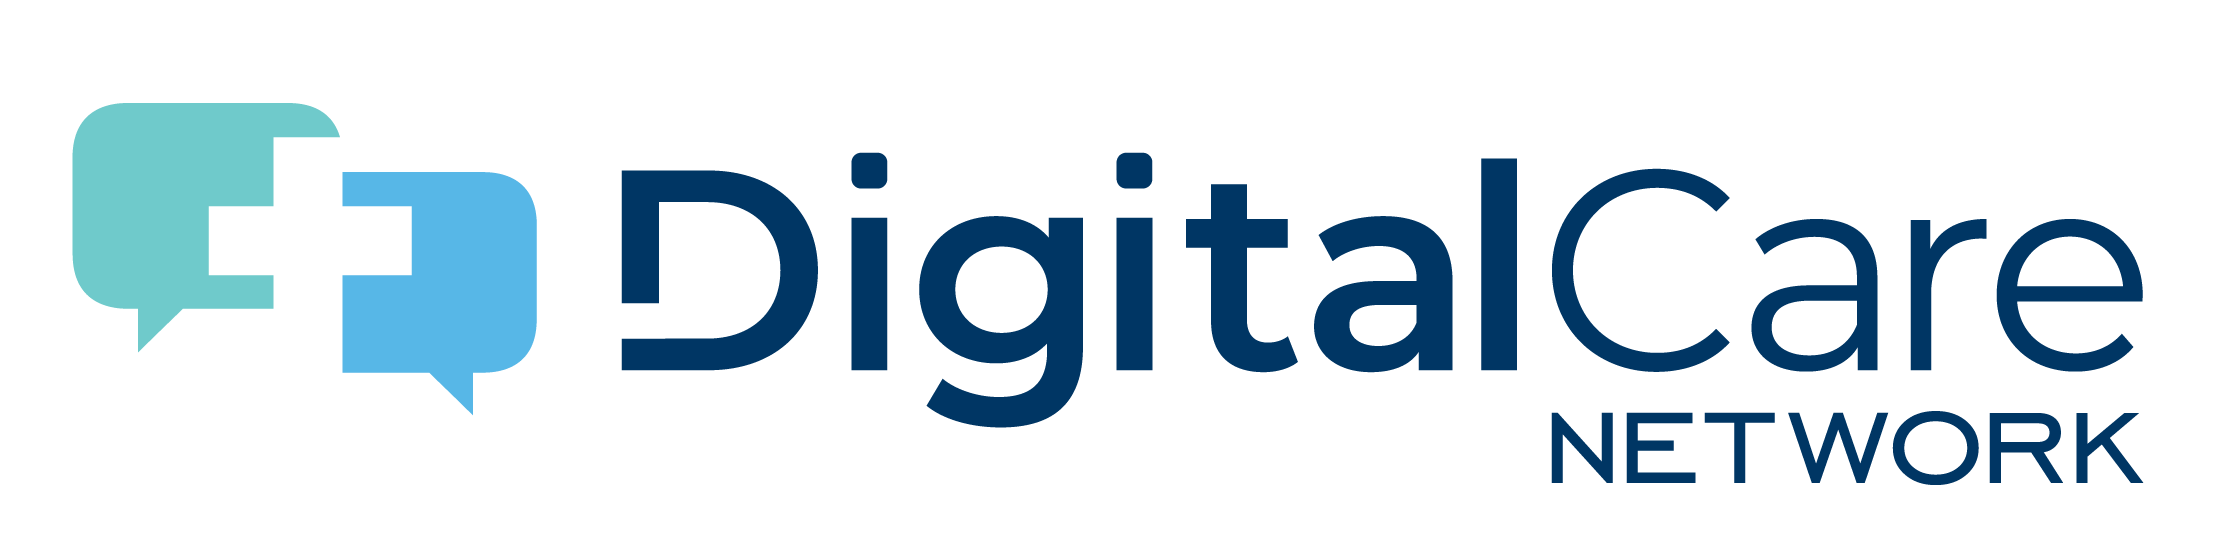 digital care main logos-H